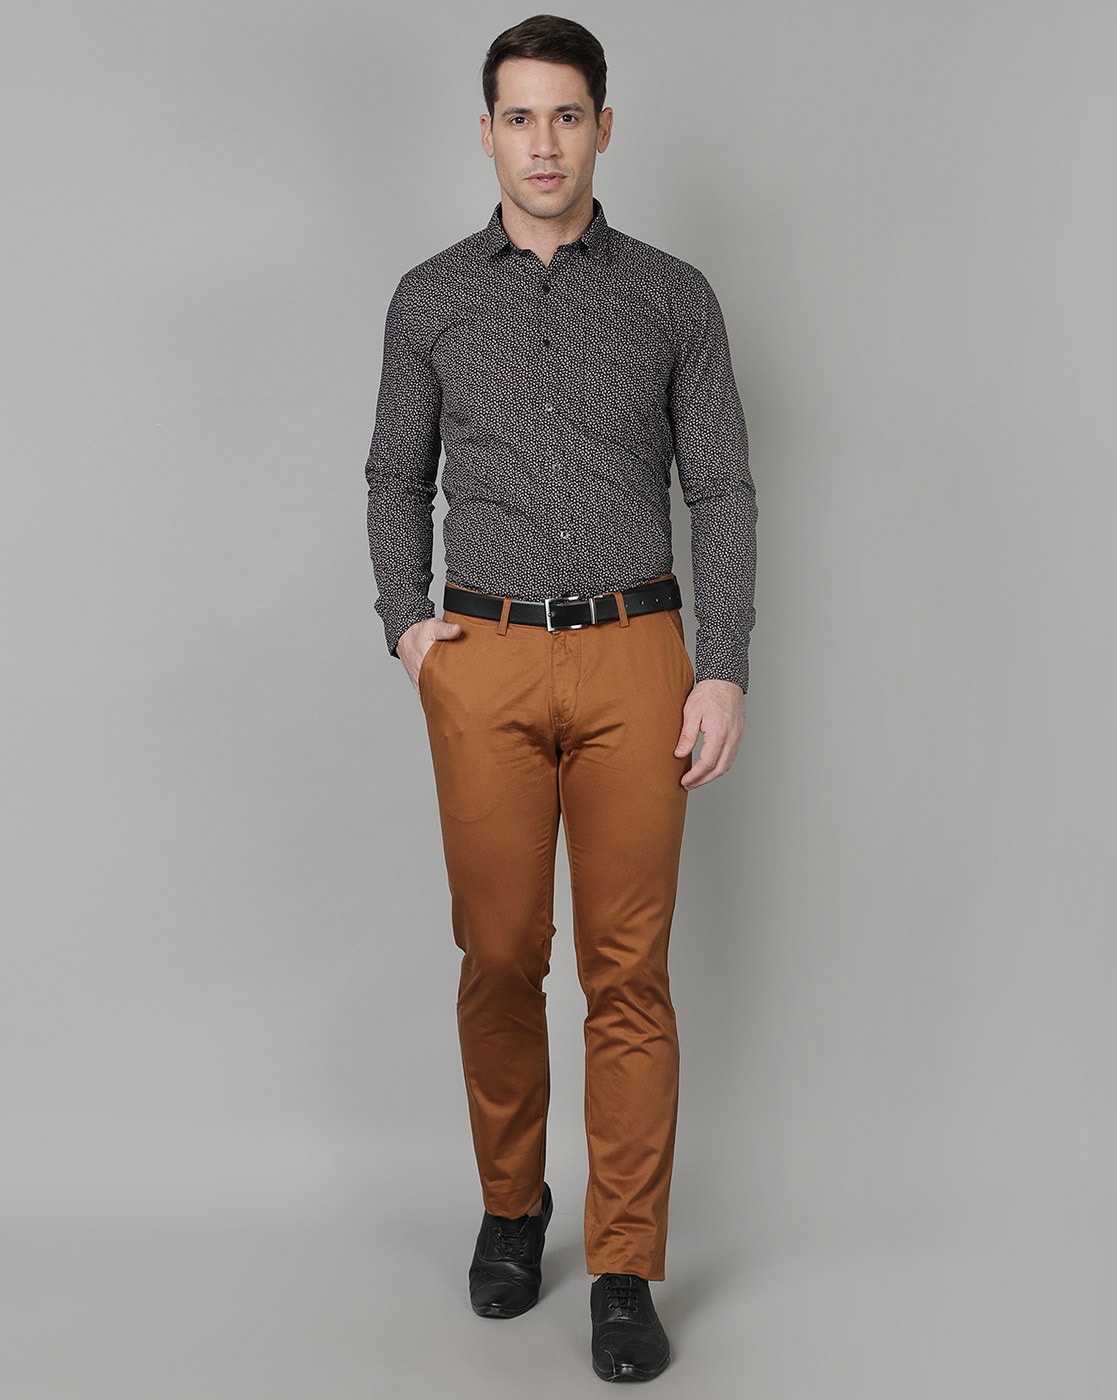 Tawny Brown Colour Cotton Pants For Men – Prime Porter